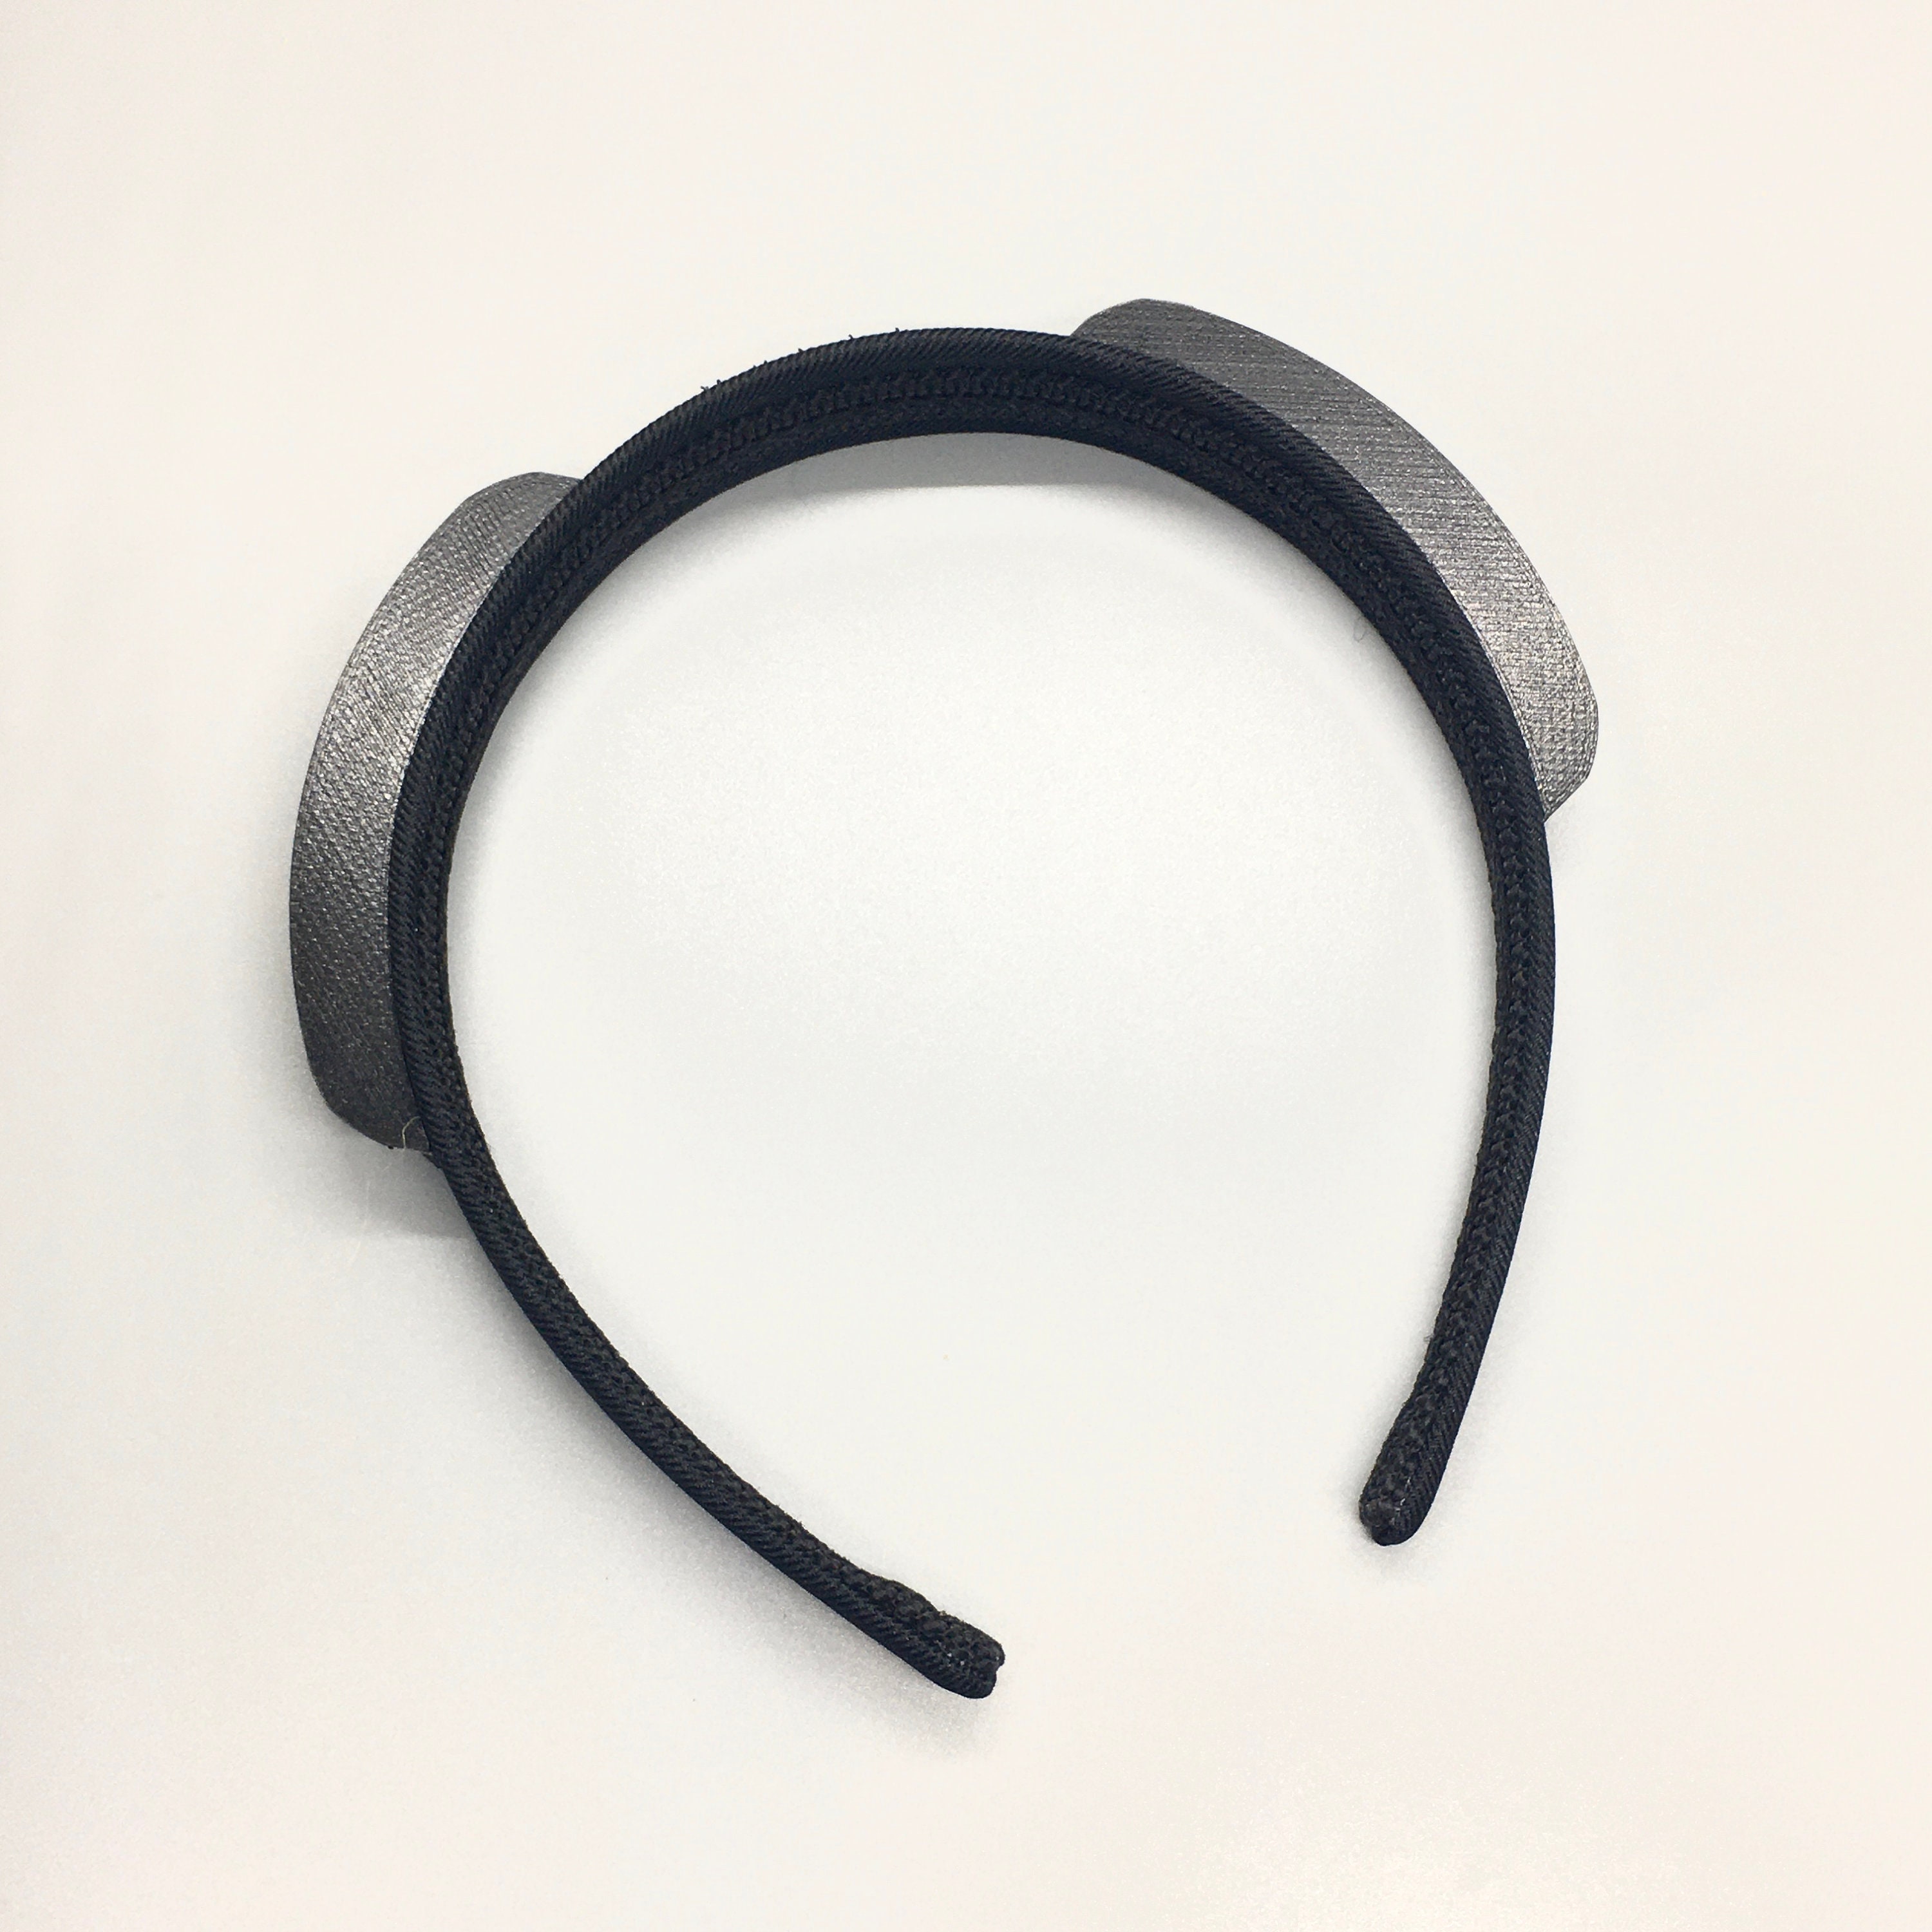 Interchangeable system headband | Etsy